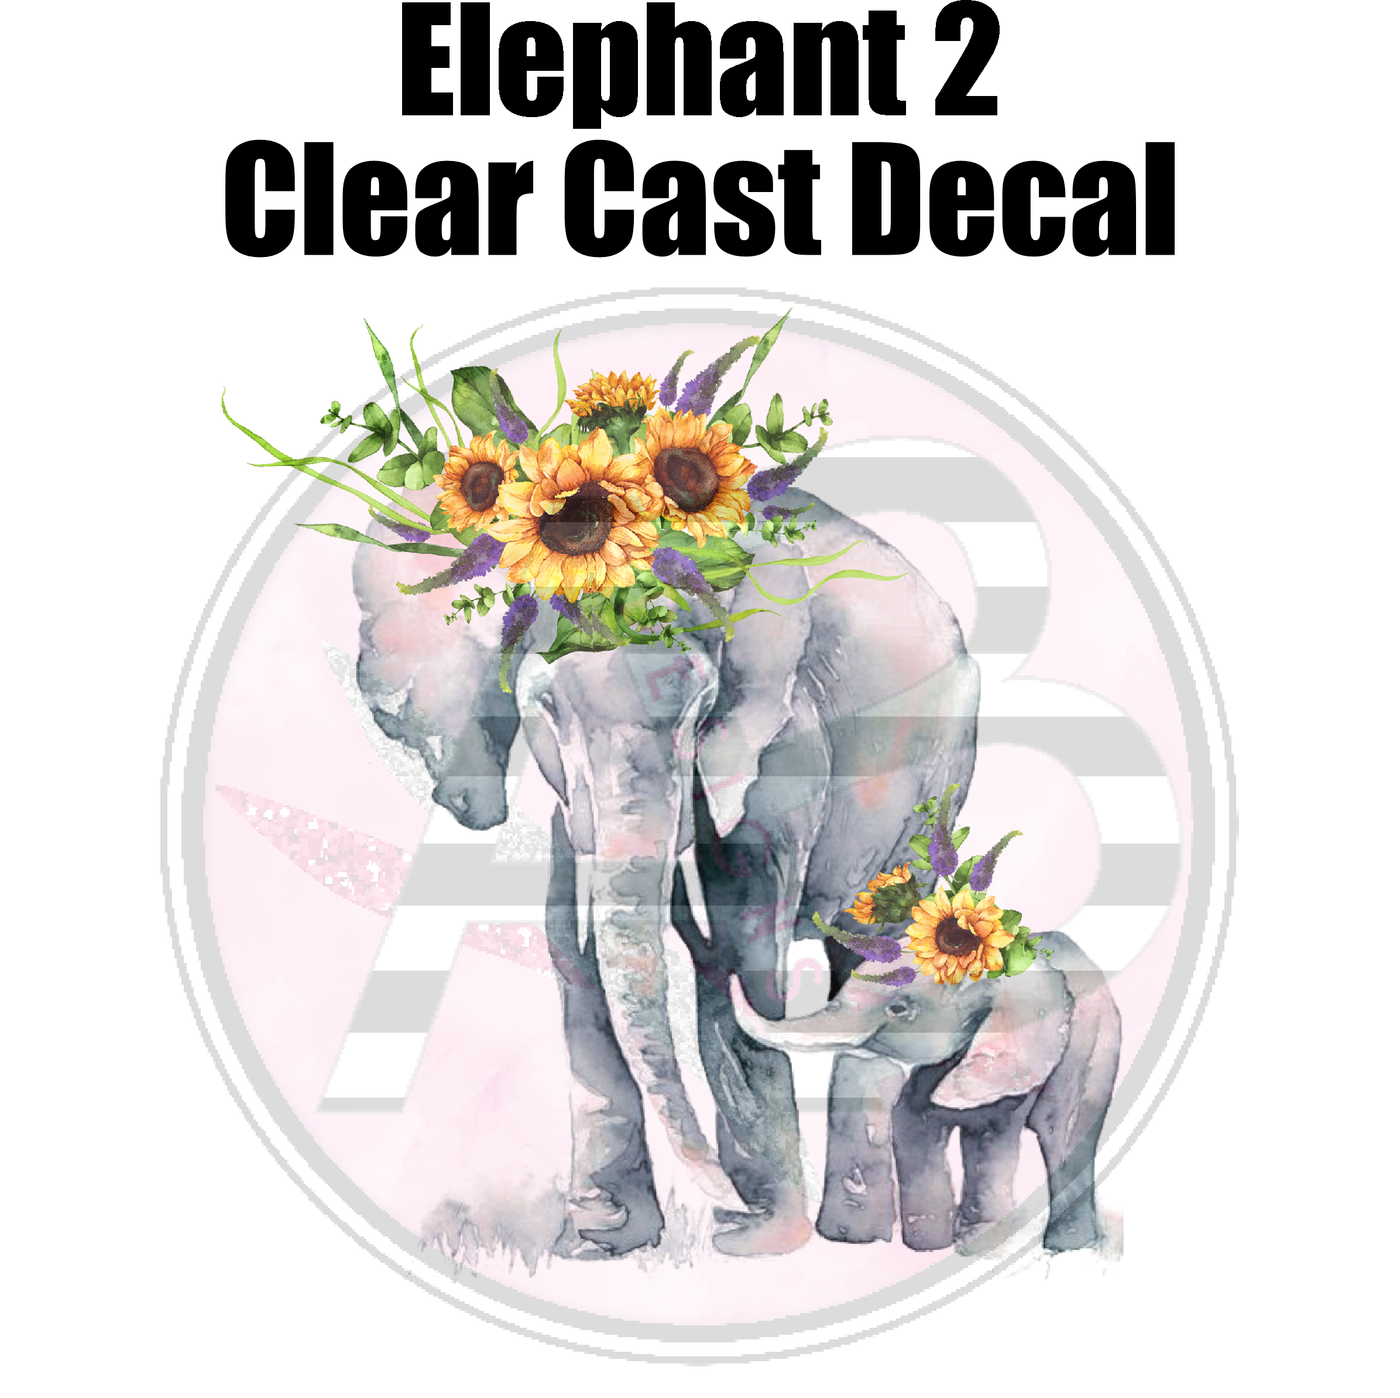 Elephant 2 - Clear Cast Decal